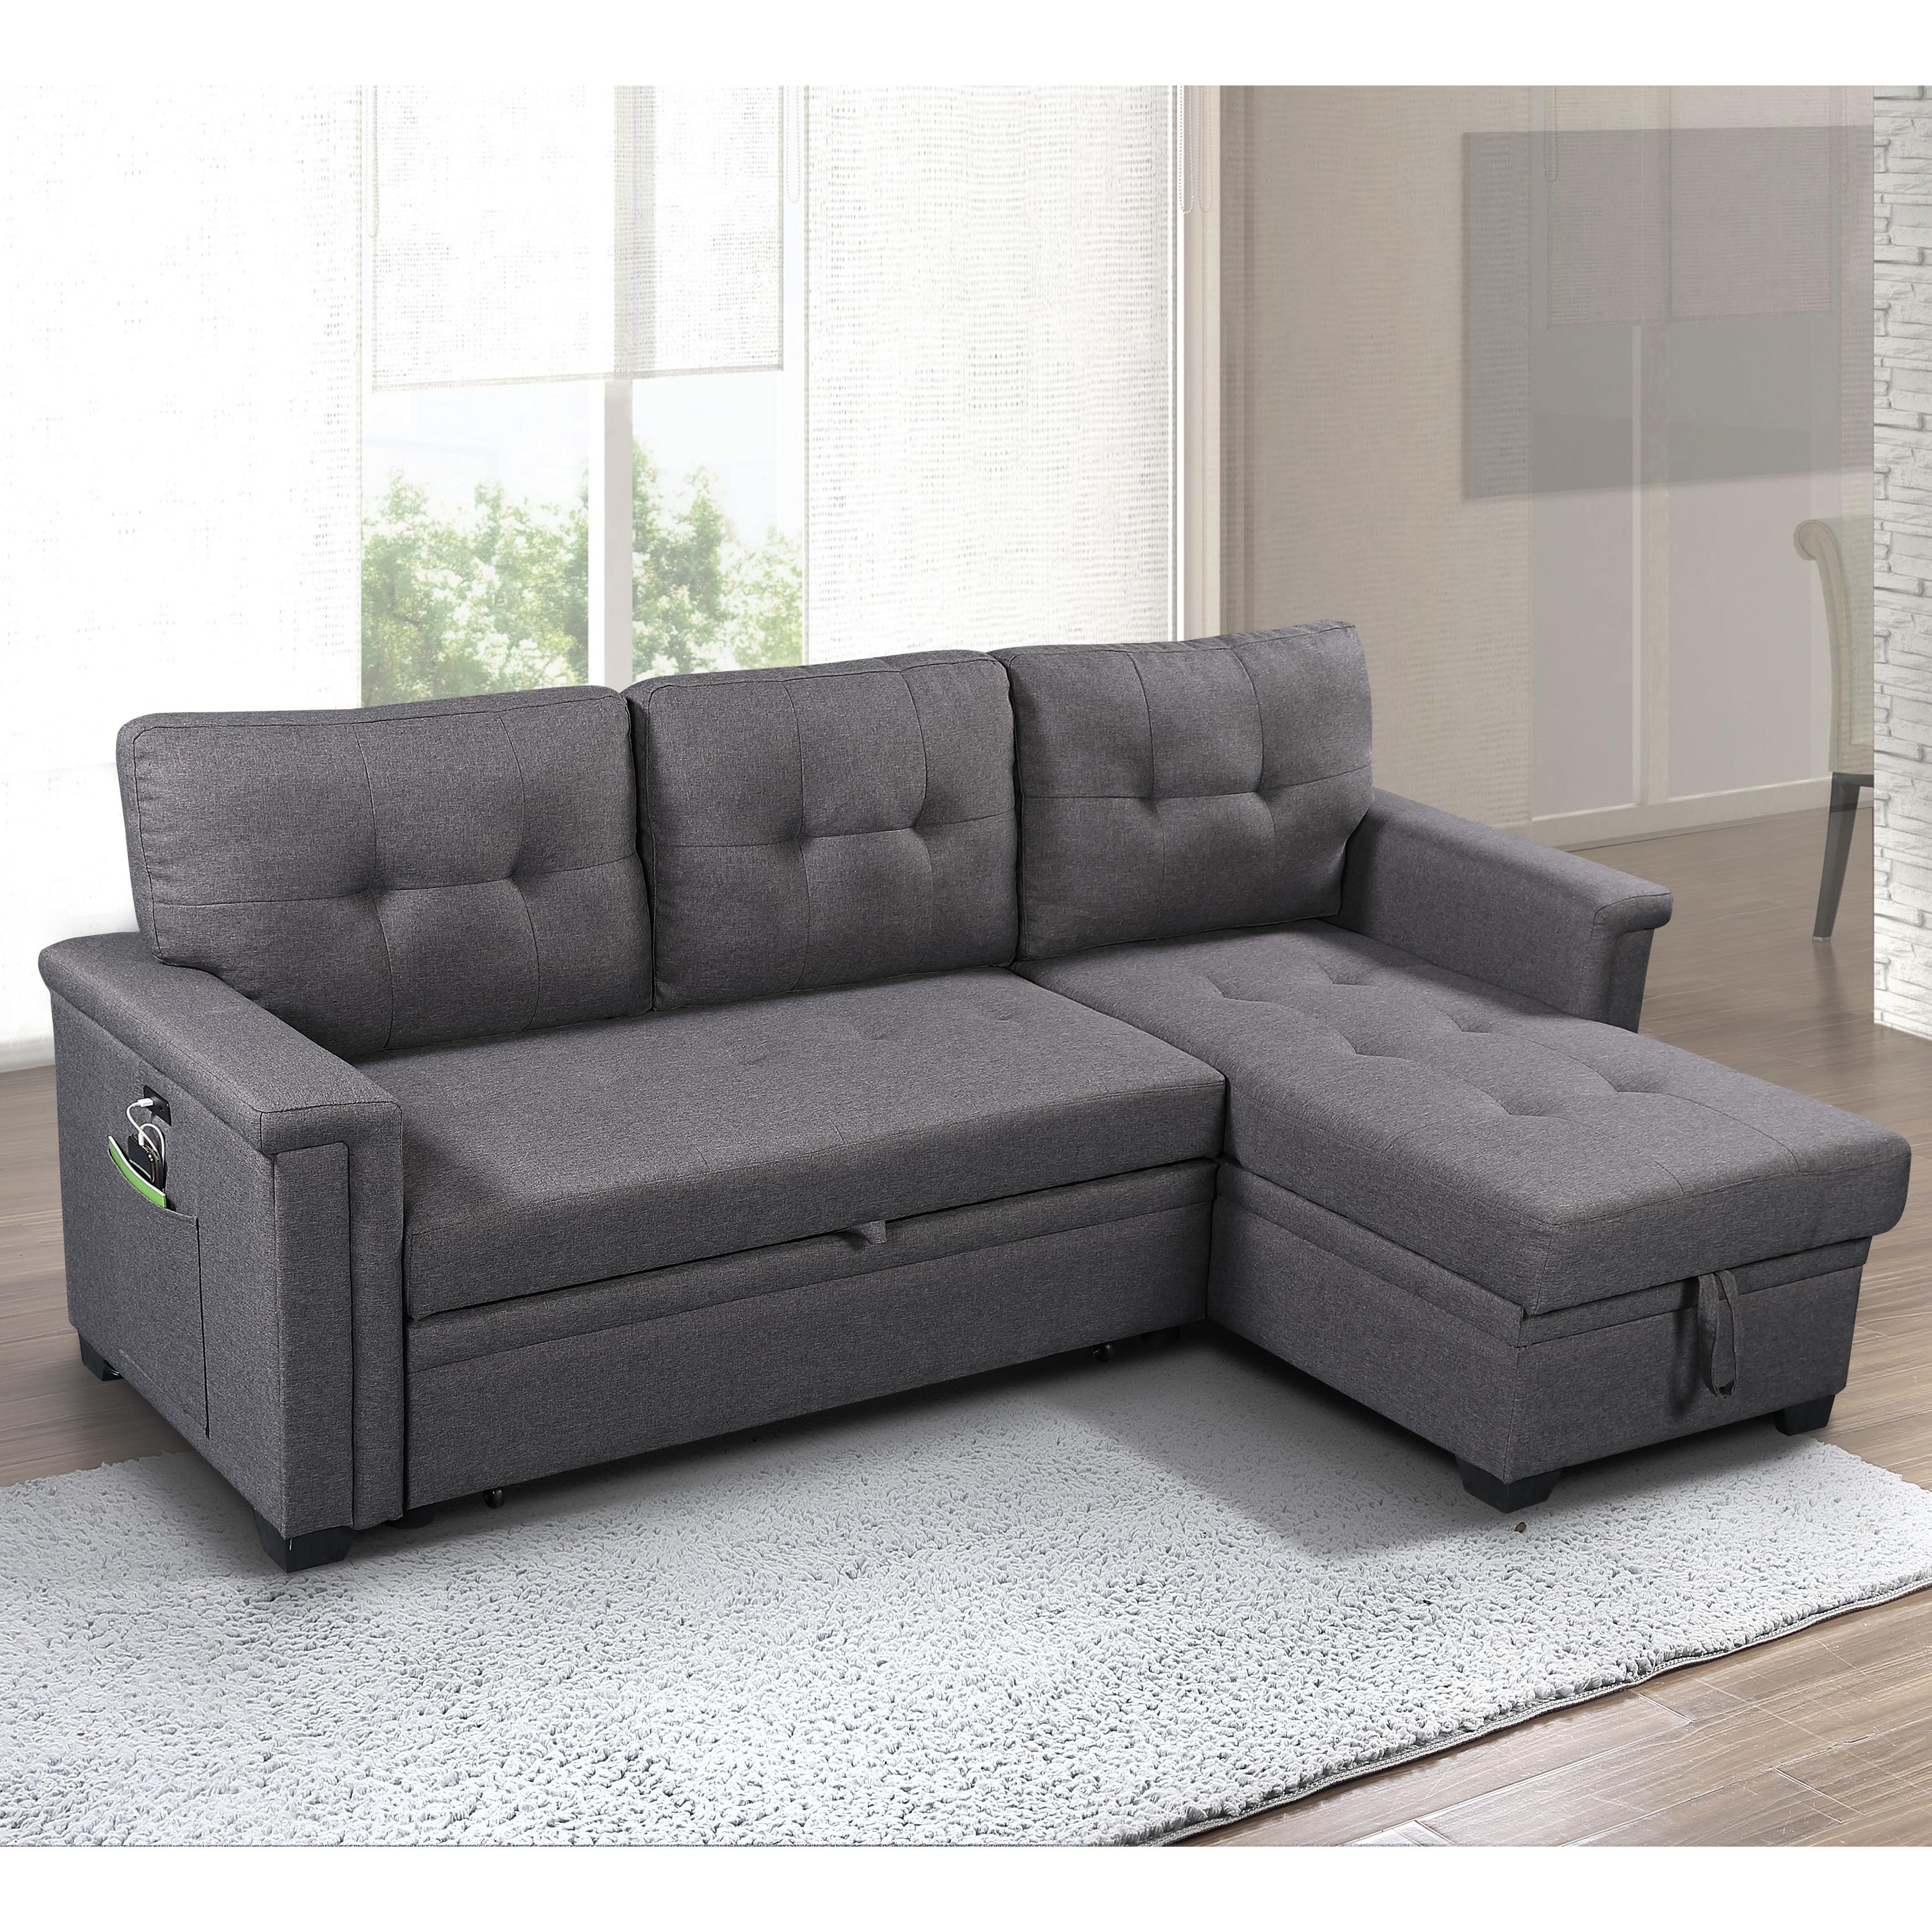 Ashlyn Reversible Sleeper Sofa With Storage Chaise – – 30144937 With Sleeper Sofas With Storage (View 2 of 15)